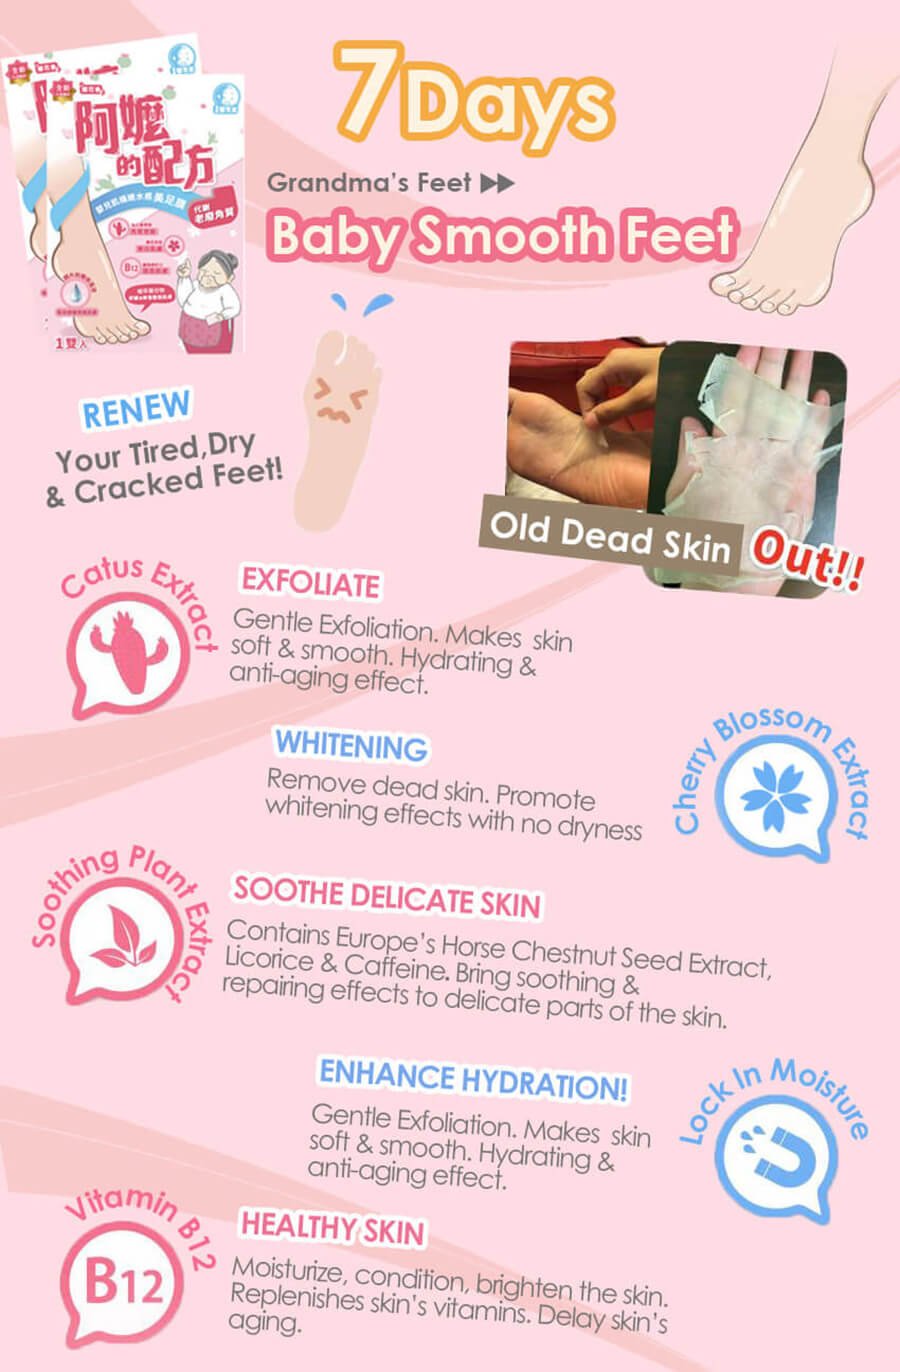 Baby Skin Foot Mask - Benefits